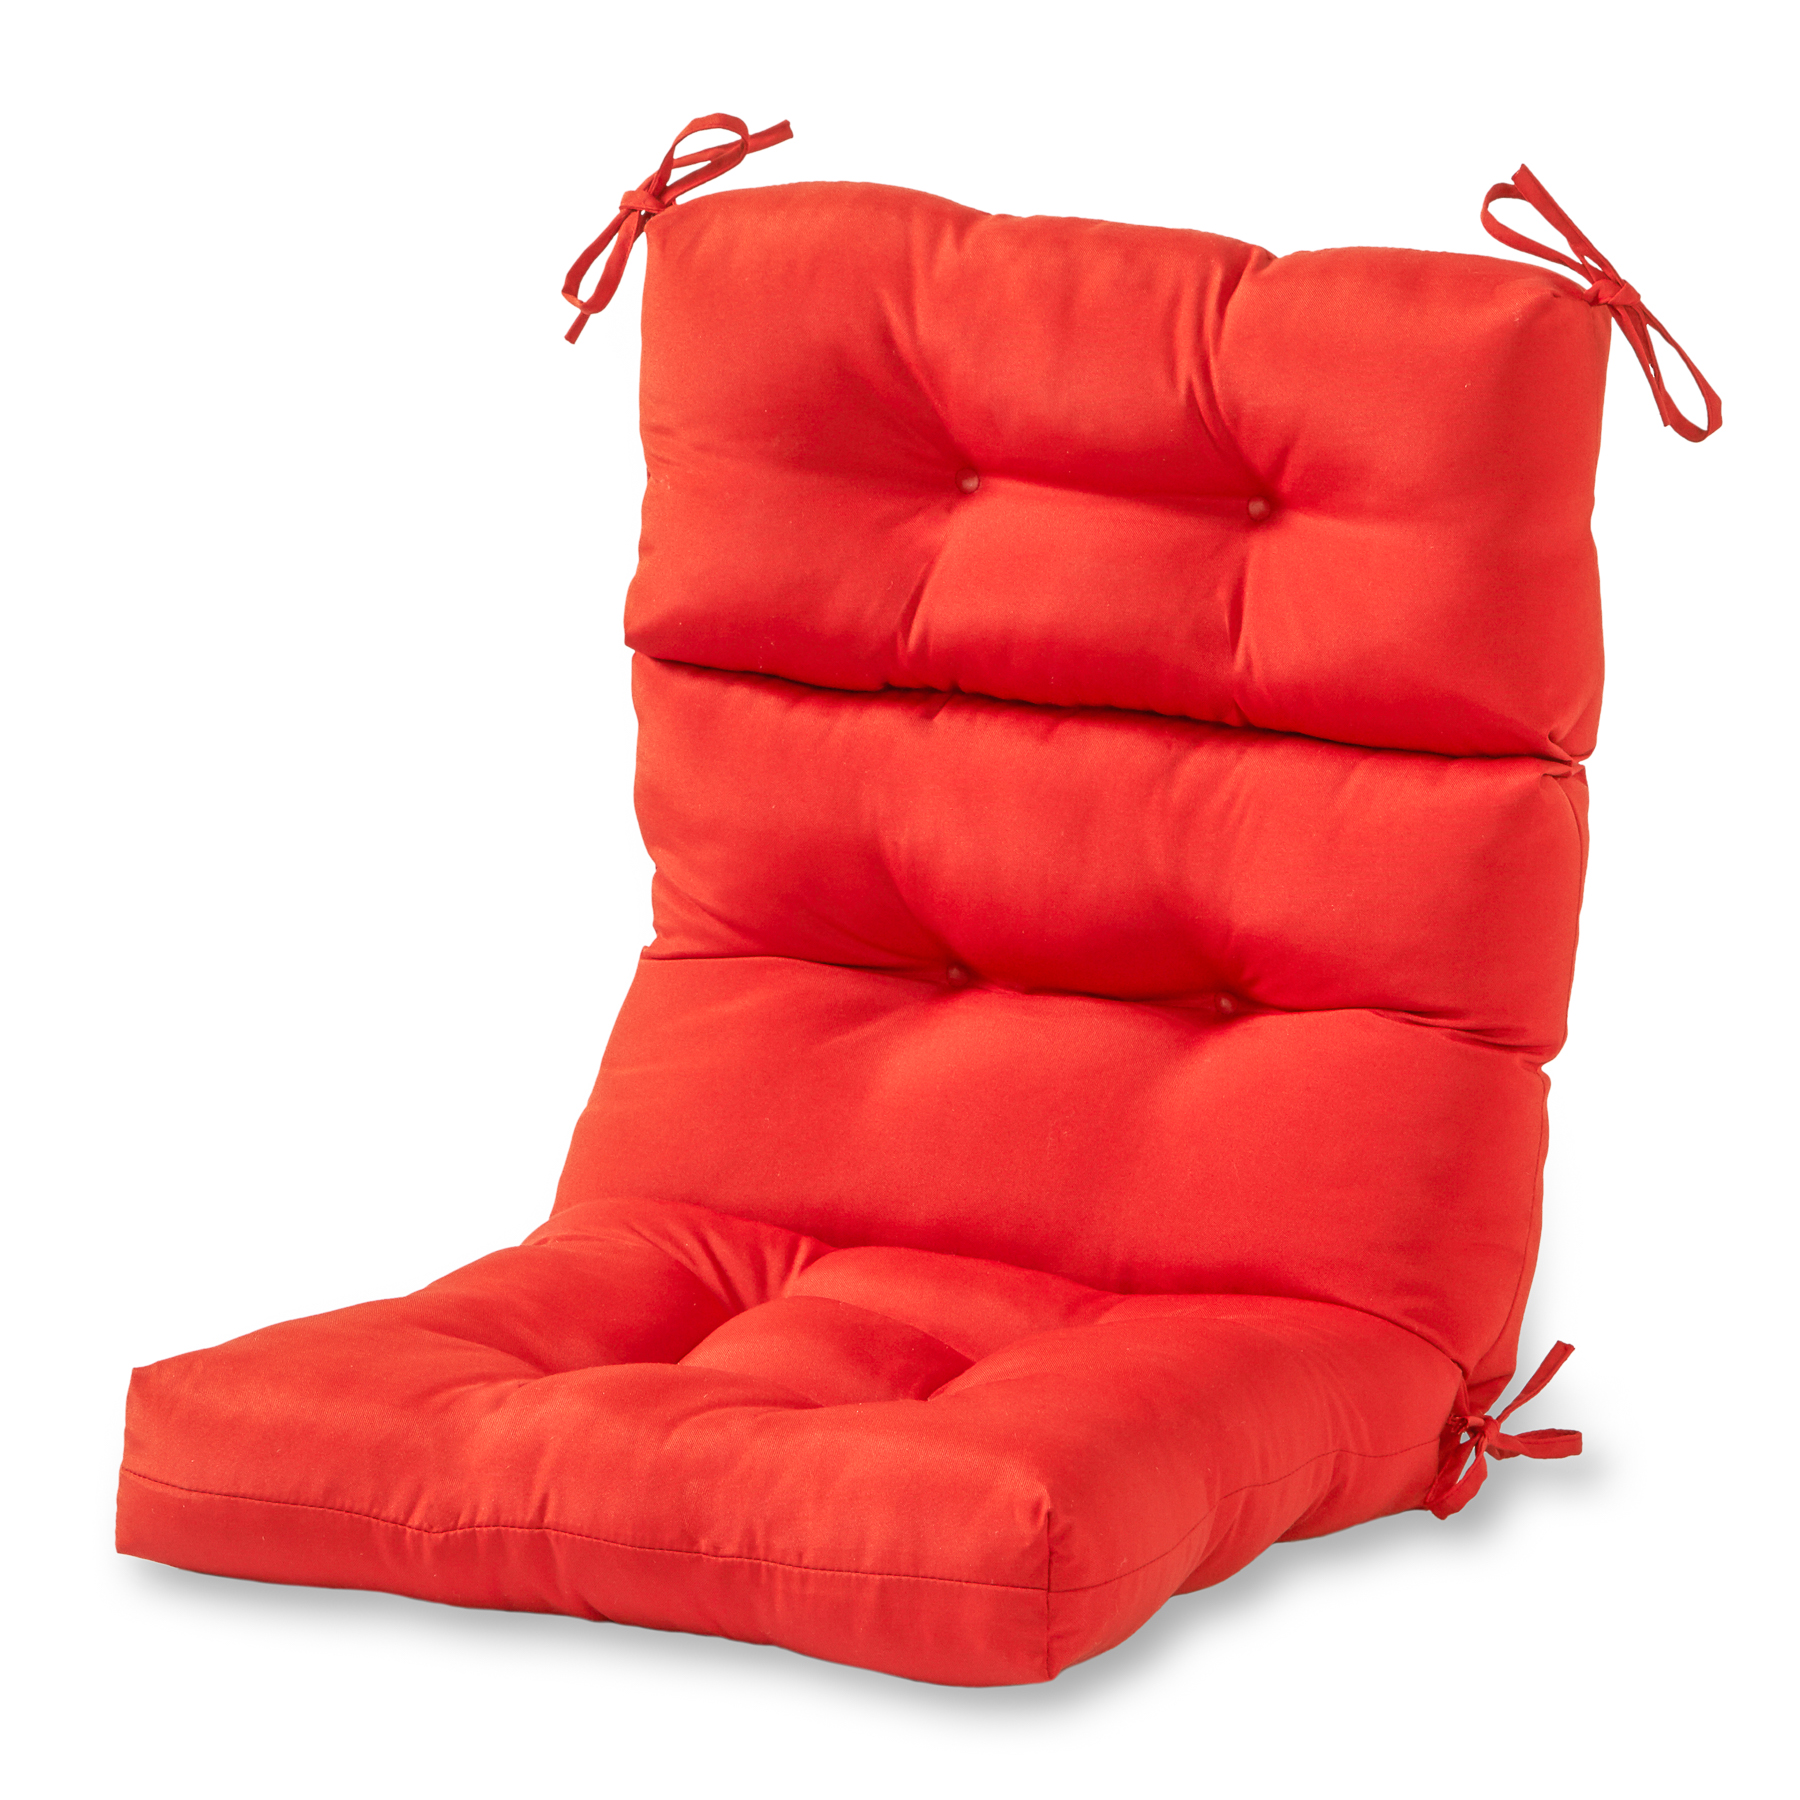 Greendale Home Fashions Outdoor High Back Chair Cushion ...